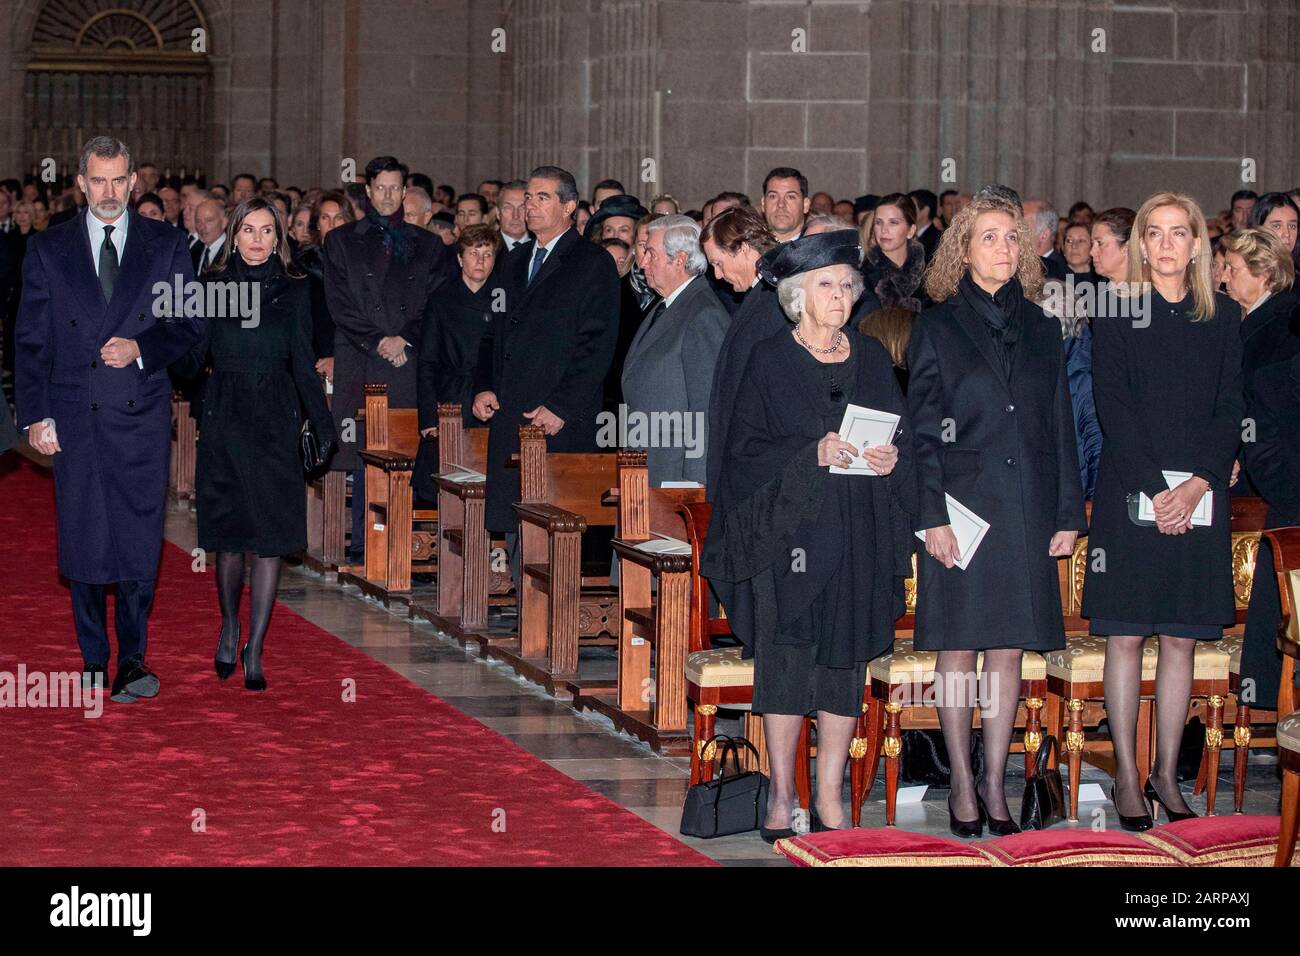 El Escorial, Spain. 29th Jan, 2020. Spain's King Felipe VI (L) and Queen Letizia (2-L), Dutch Princess Beatrix (3-R), Spanish princesses Elena de Borbon (2-R) and Cristina de Borbon (R), attend the funeral of Spanish princess Pilar de Borbon, Duchess of Badajoz and Monarch' aunt, at the Real Monasterio de San Lorenzo basilica, in El Escorial, outside Madrid, Spain, 29 January 2020. More than 200 people attend the funeral, held 21 days after the death of the princess at 83. EFE/ Emilio Naranjo POOL Credit: CORDON PRESS/Alamy Live News Stock Photo